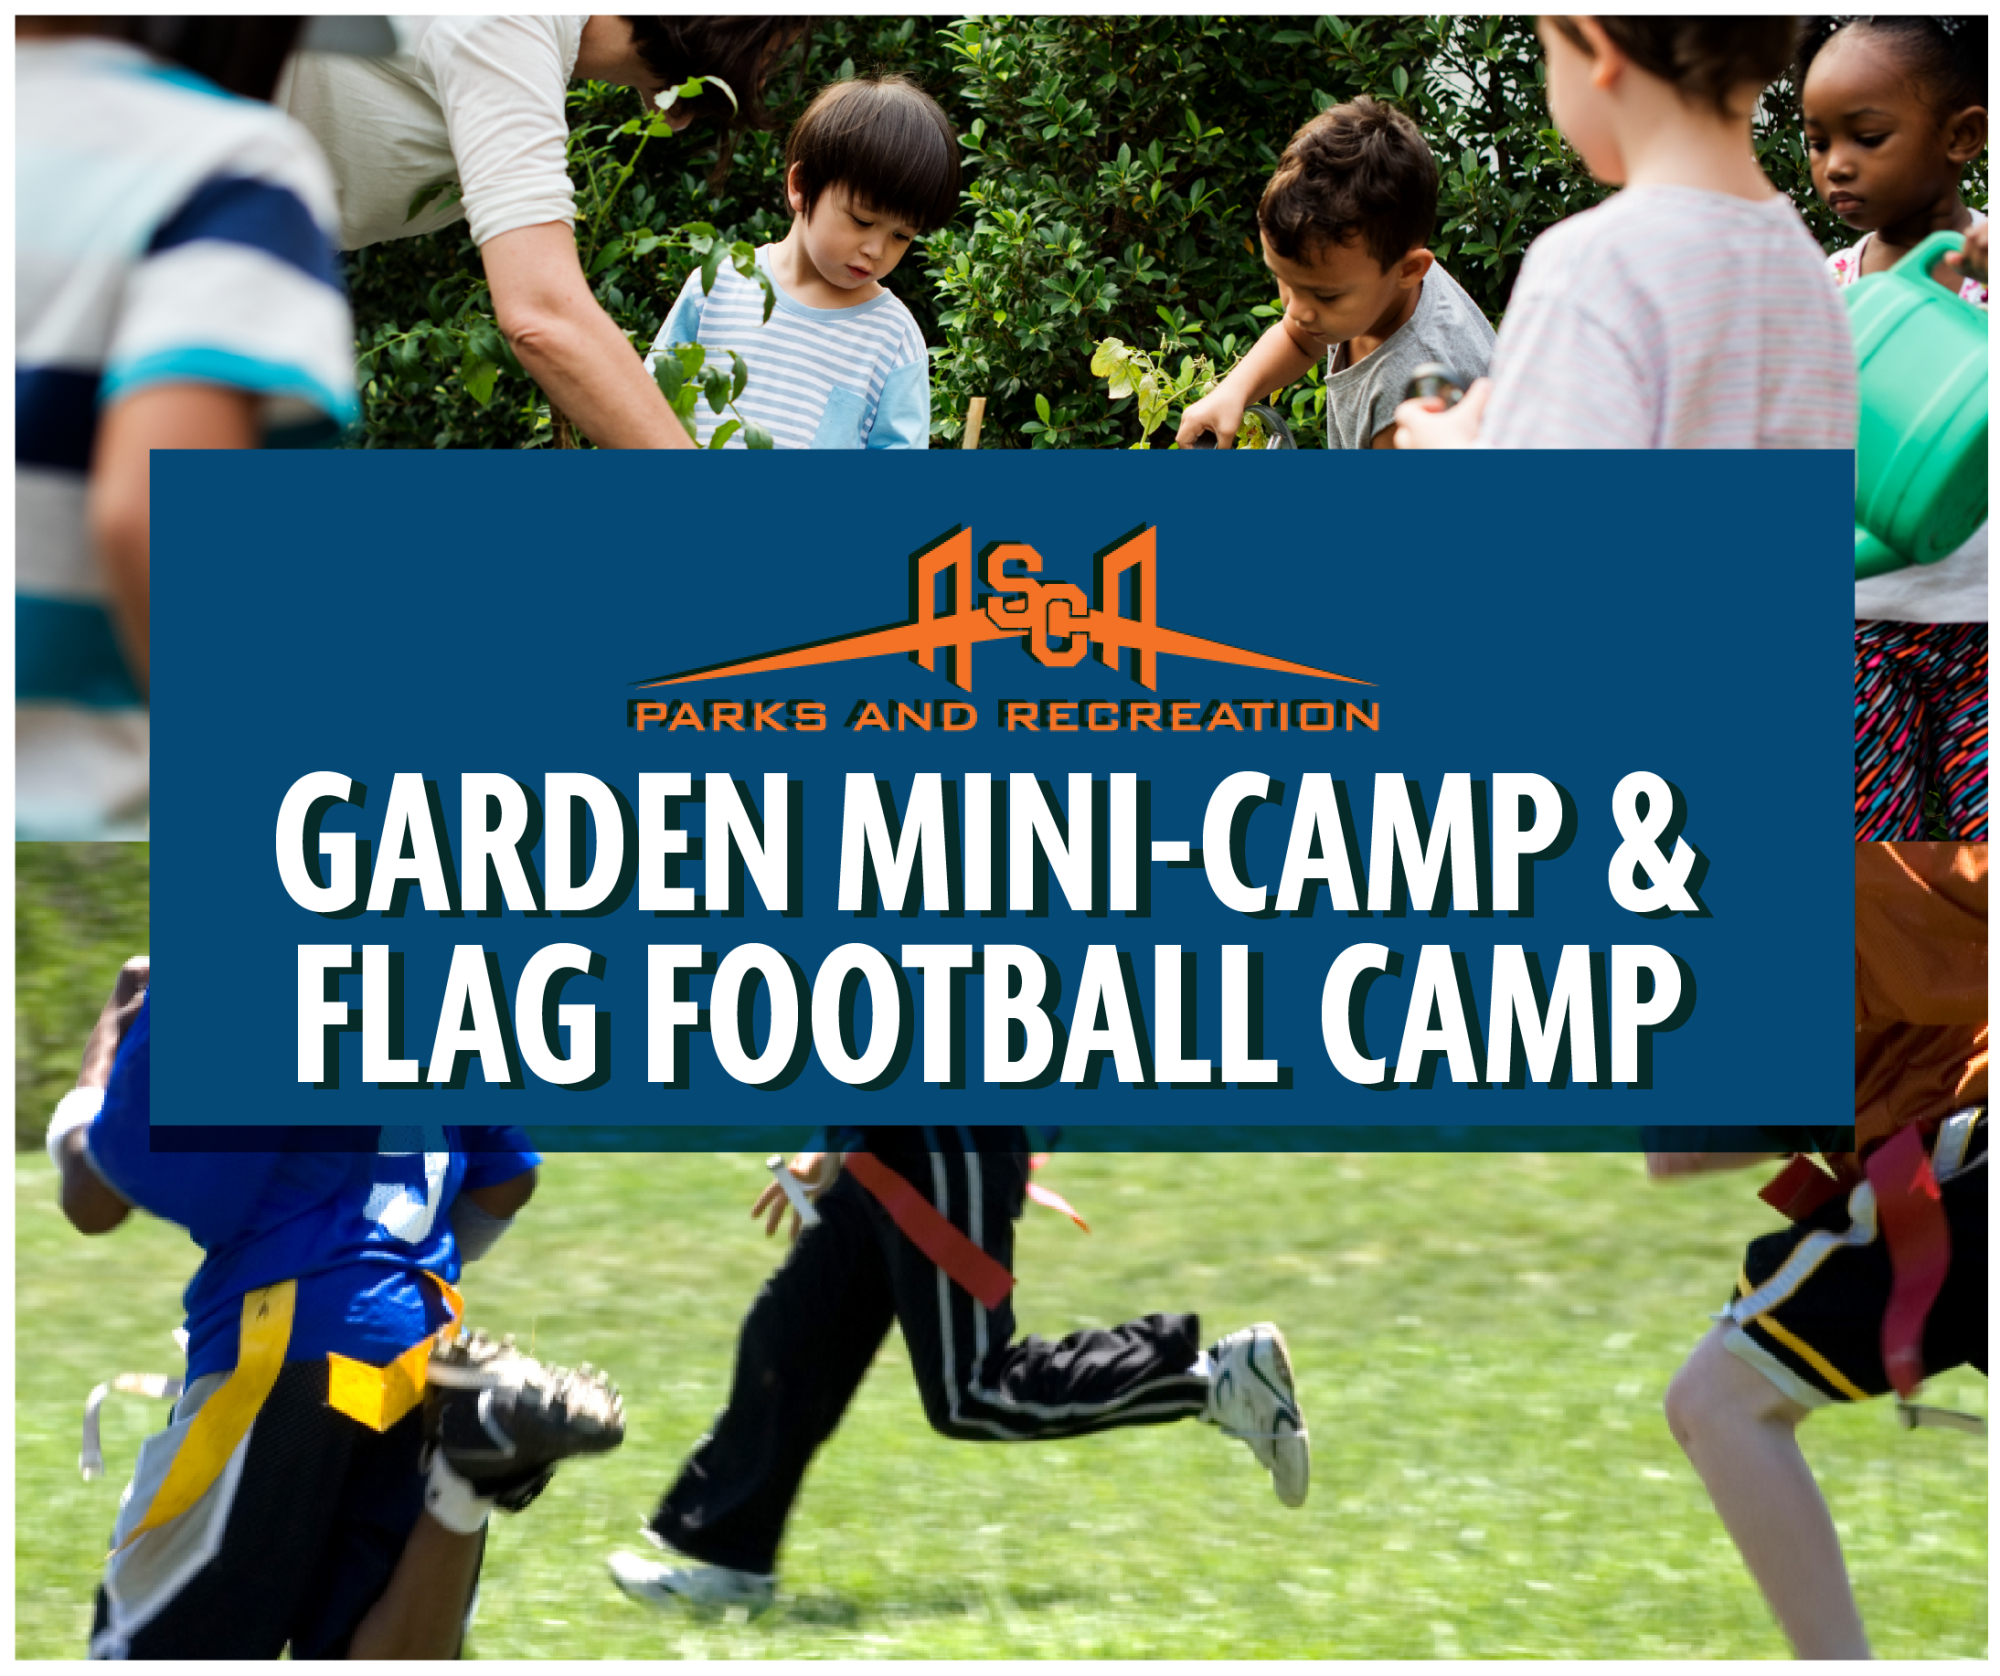 Garden Mini Camp & Flag Football Camp Info